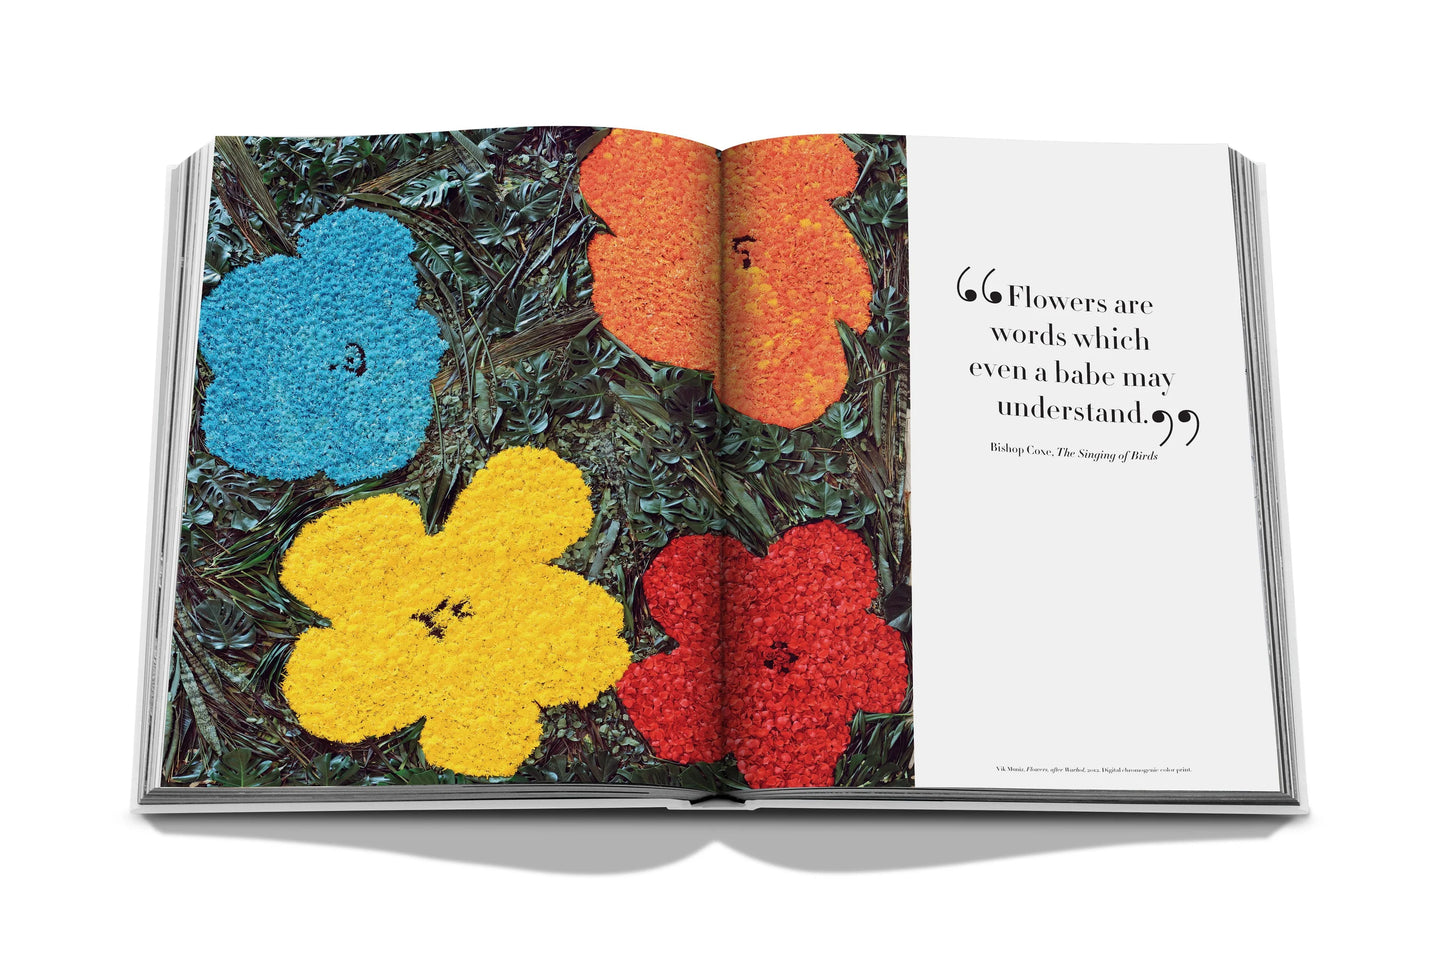 Flowers : Arts & Bouquets Editions ASSOULINE